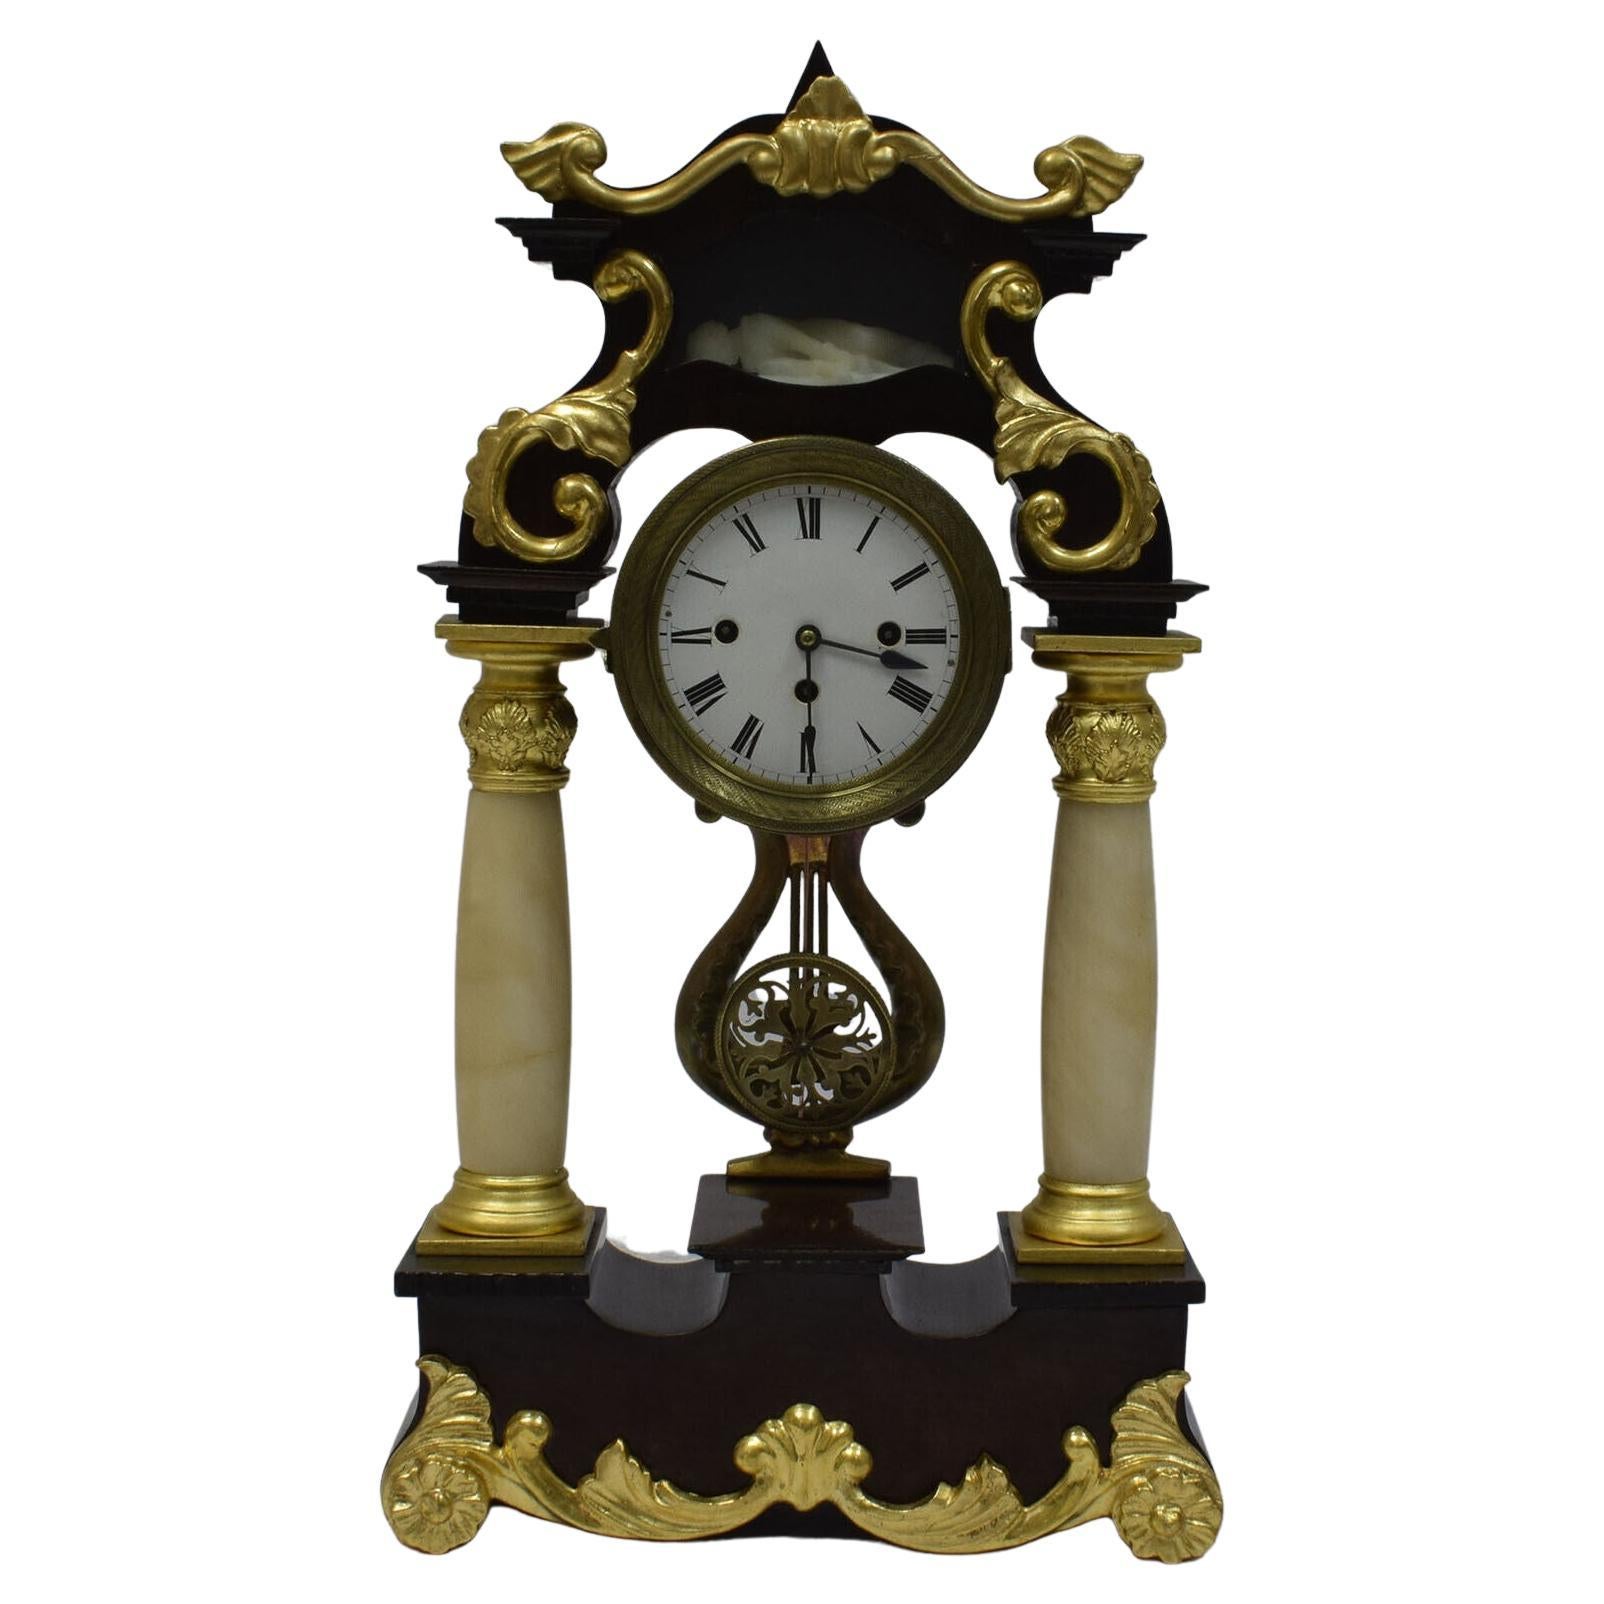 19th Century Functional Column Clock, Antique Mantel Clock with Portico, 1G03